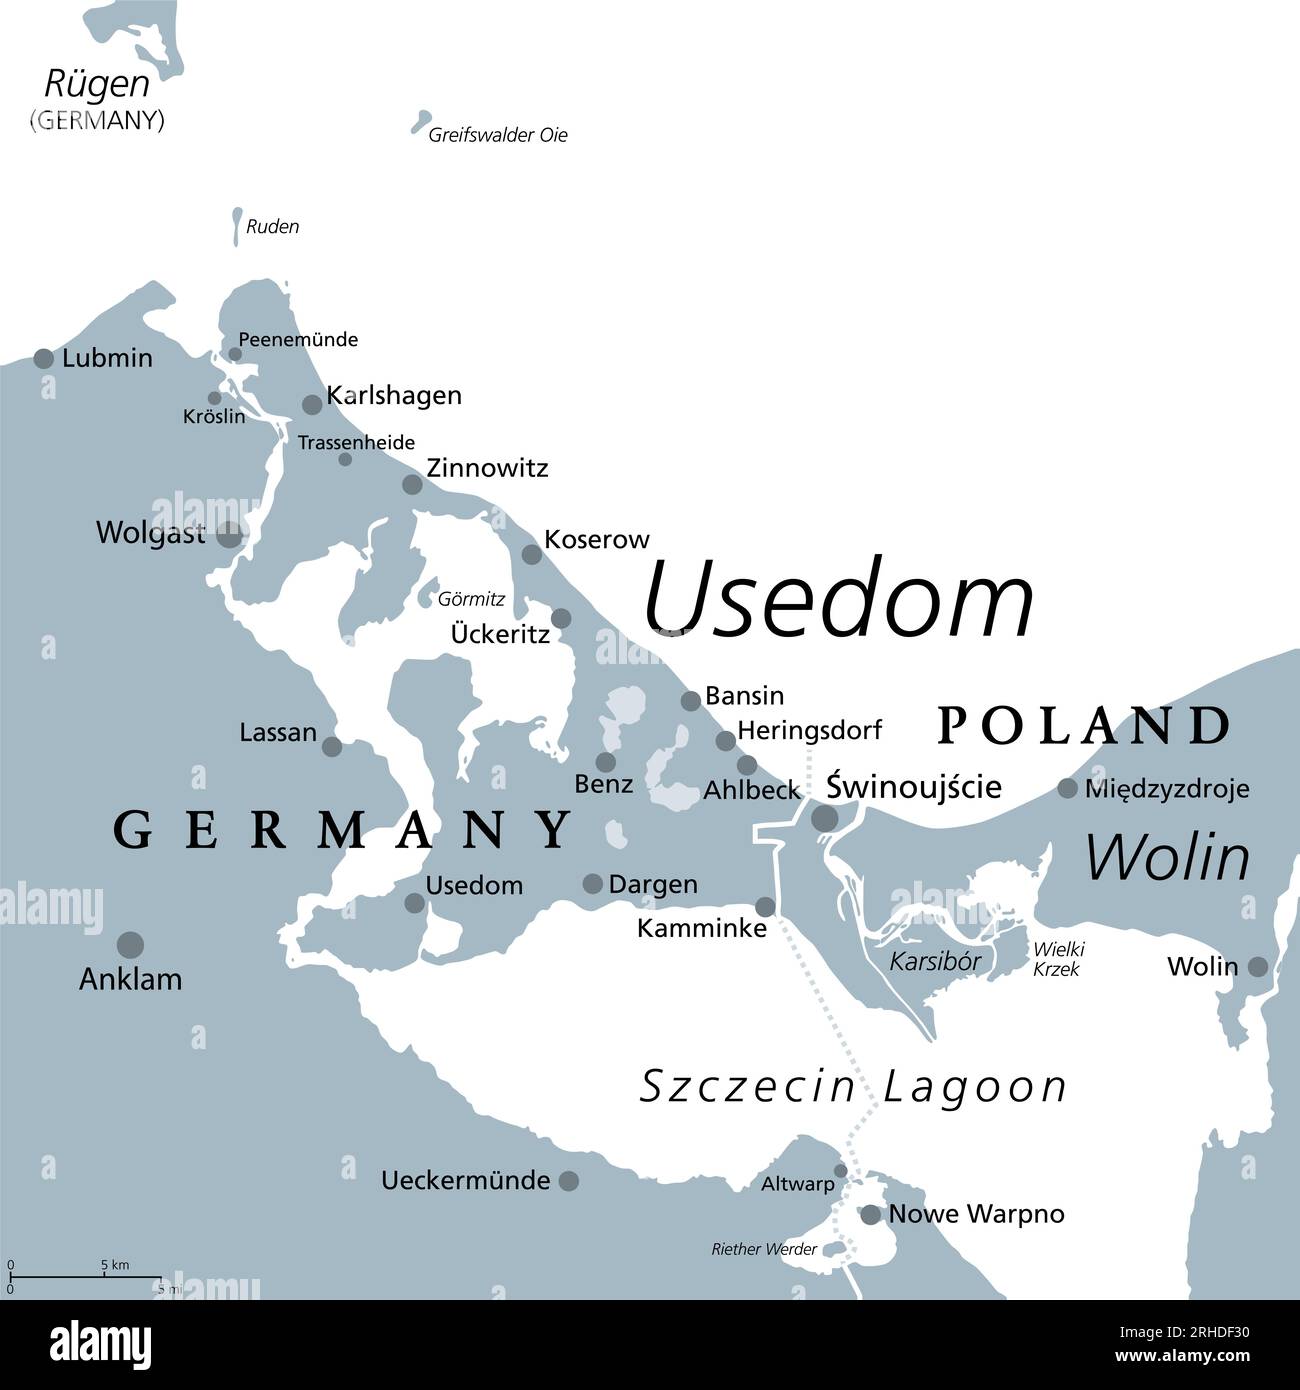 Usedom, Baltic Sea island in Pomerania, gray political map. Nicknamed Sun Island, sunniest and most populous Island of the Baltic Sea. Stock Photo